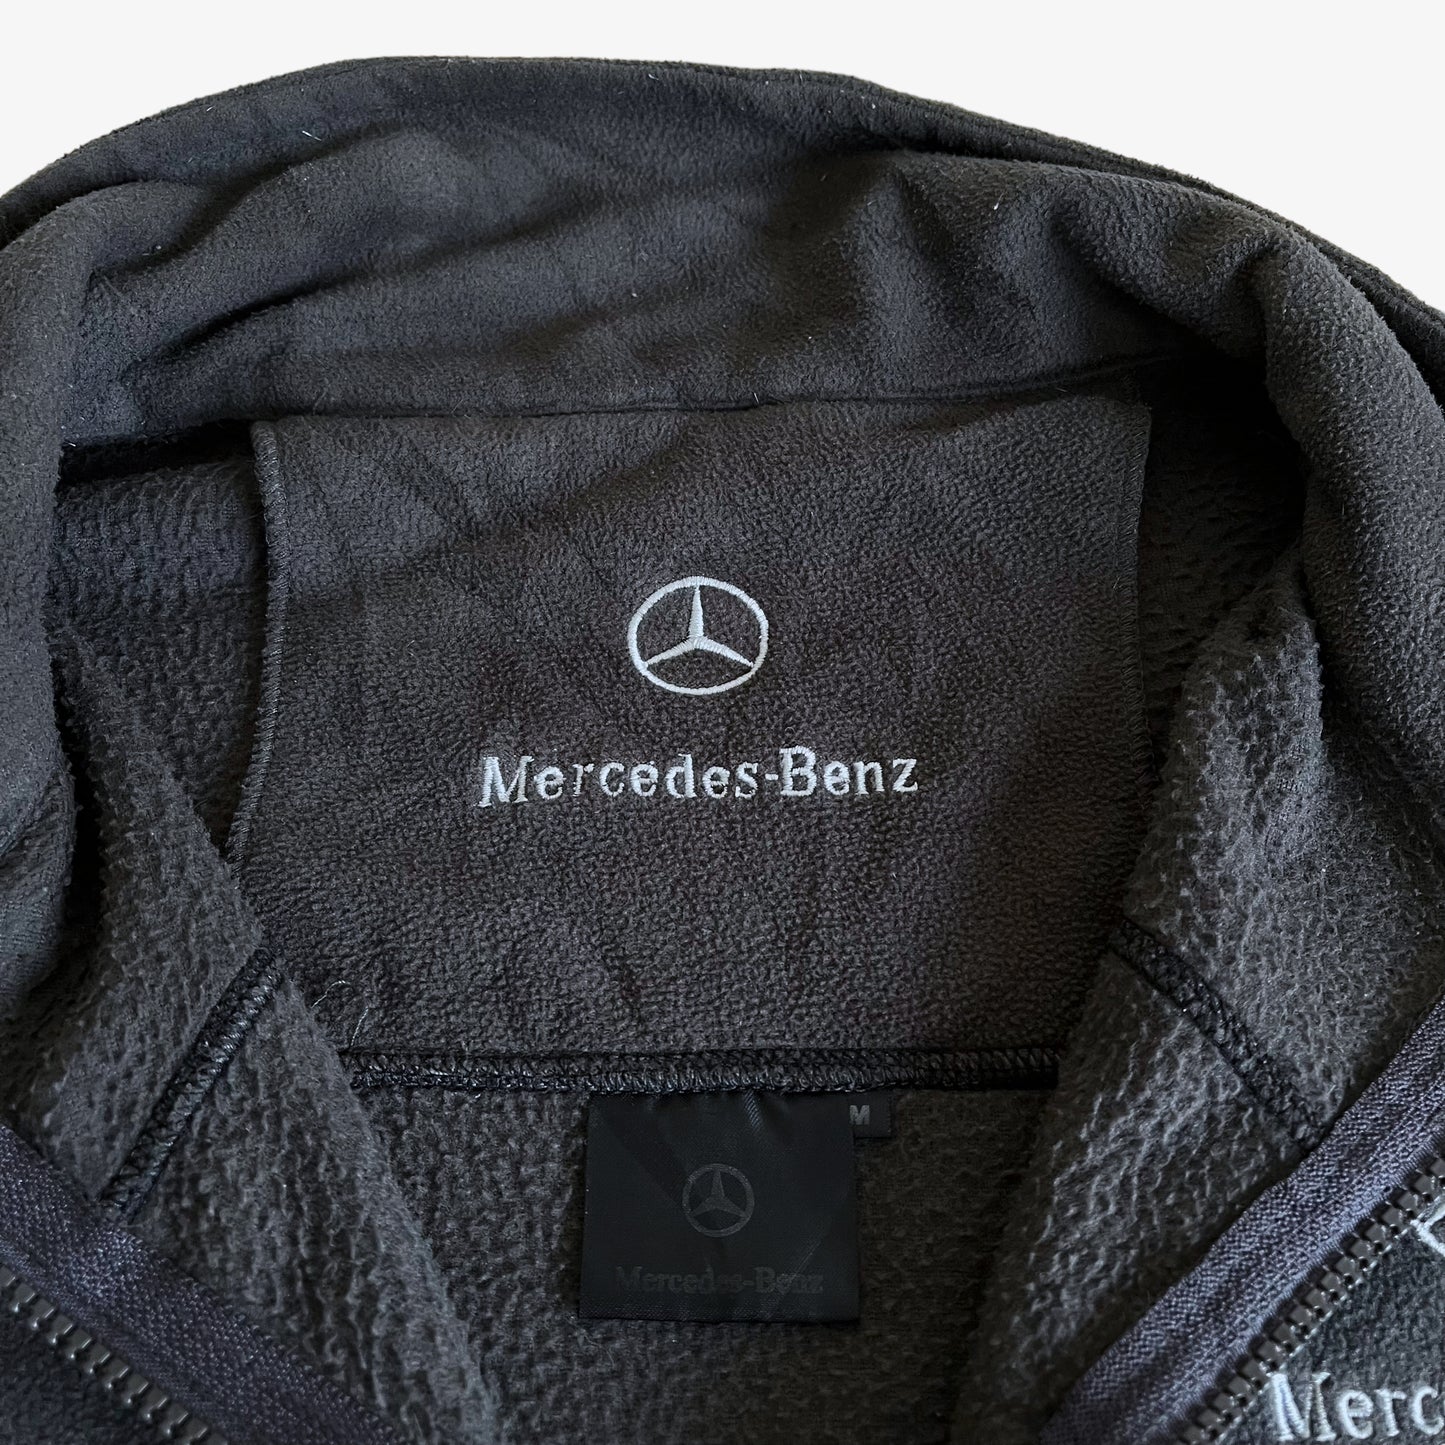 Vintage 90s Mercedes Benz Fleece Jacket Label - Casspios Dream